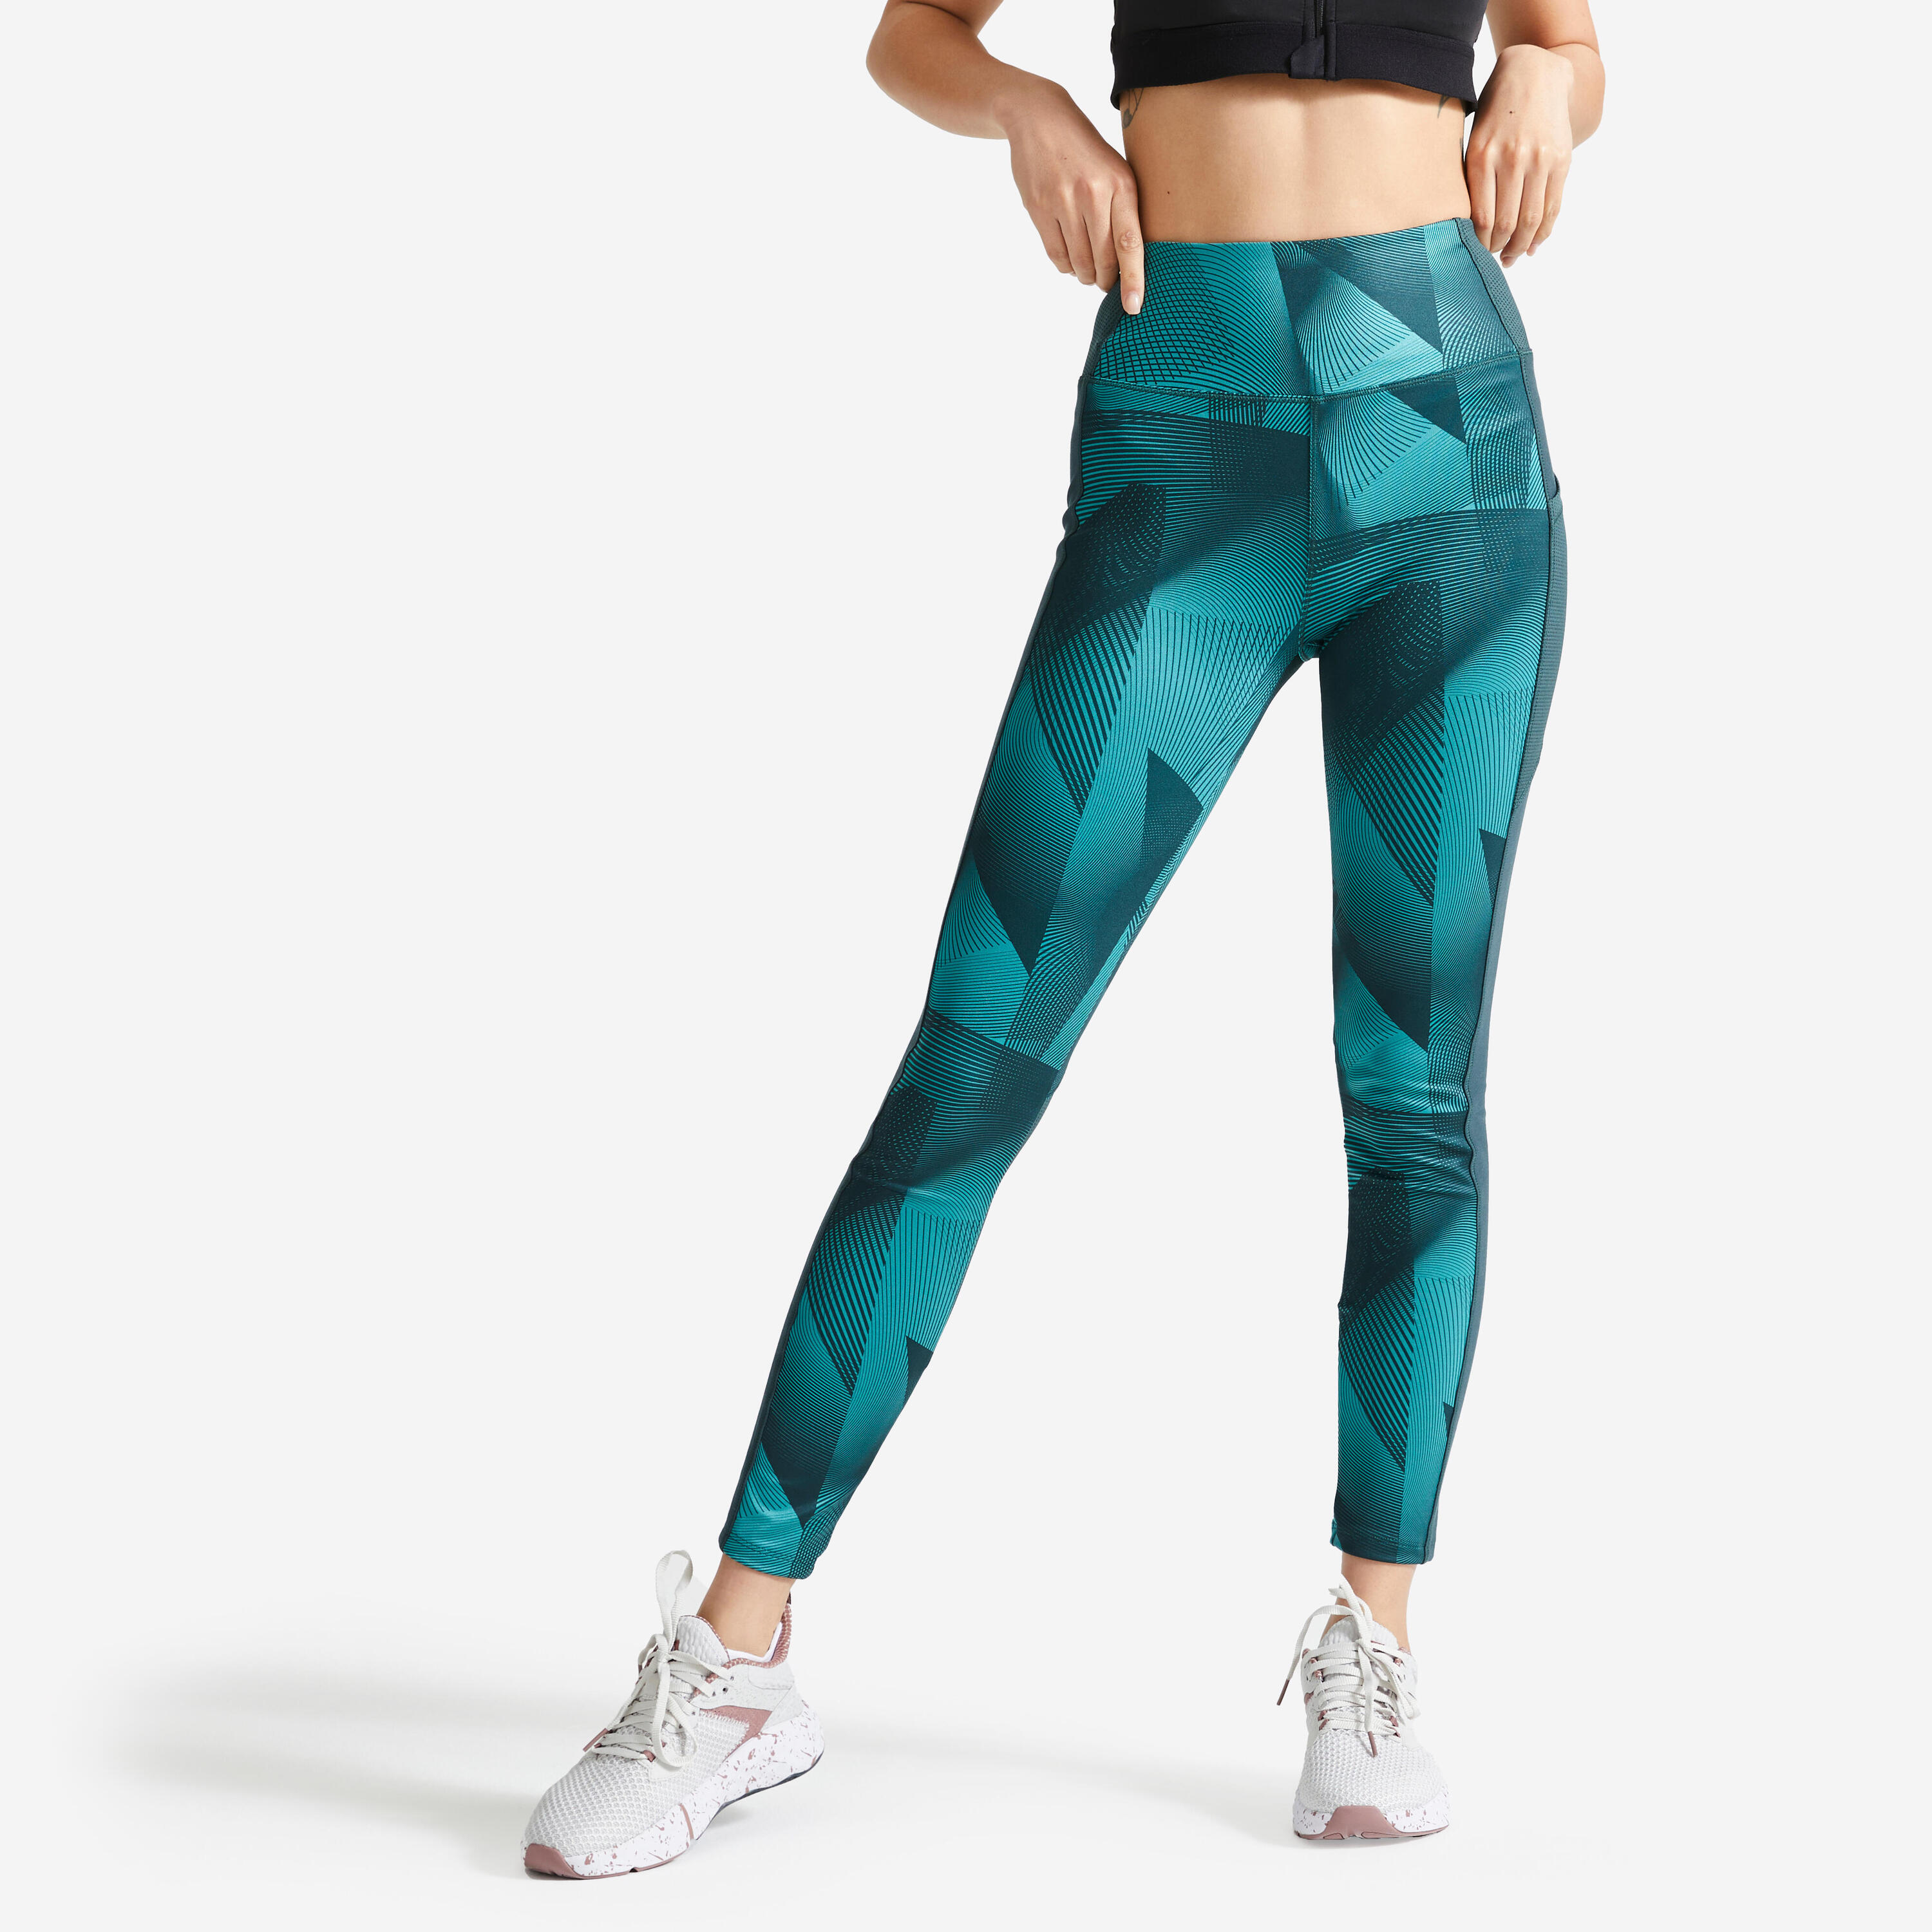 DOMYOS Women's phone pocket fitness high-waisted leggings, green print